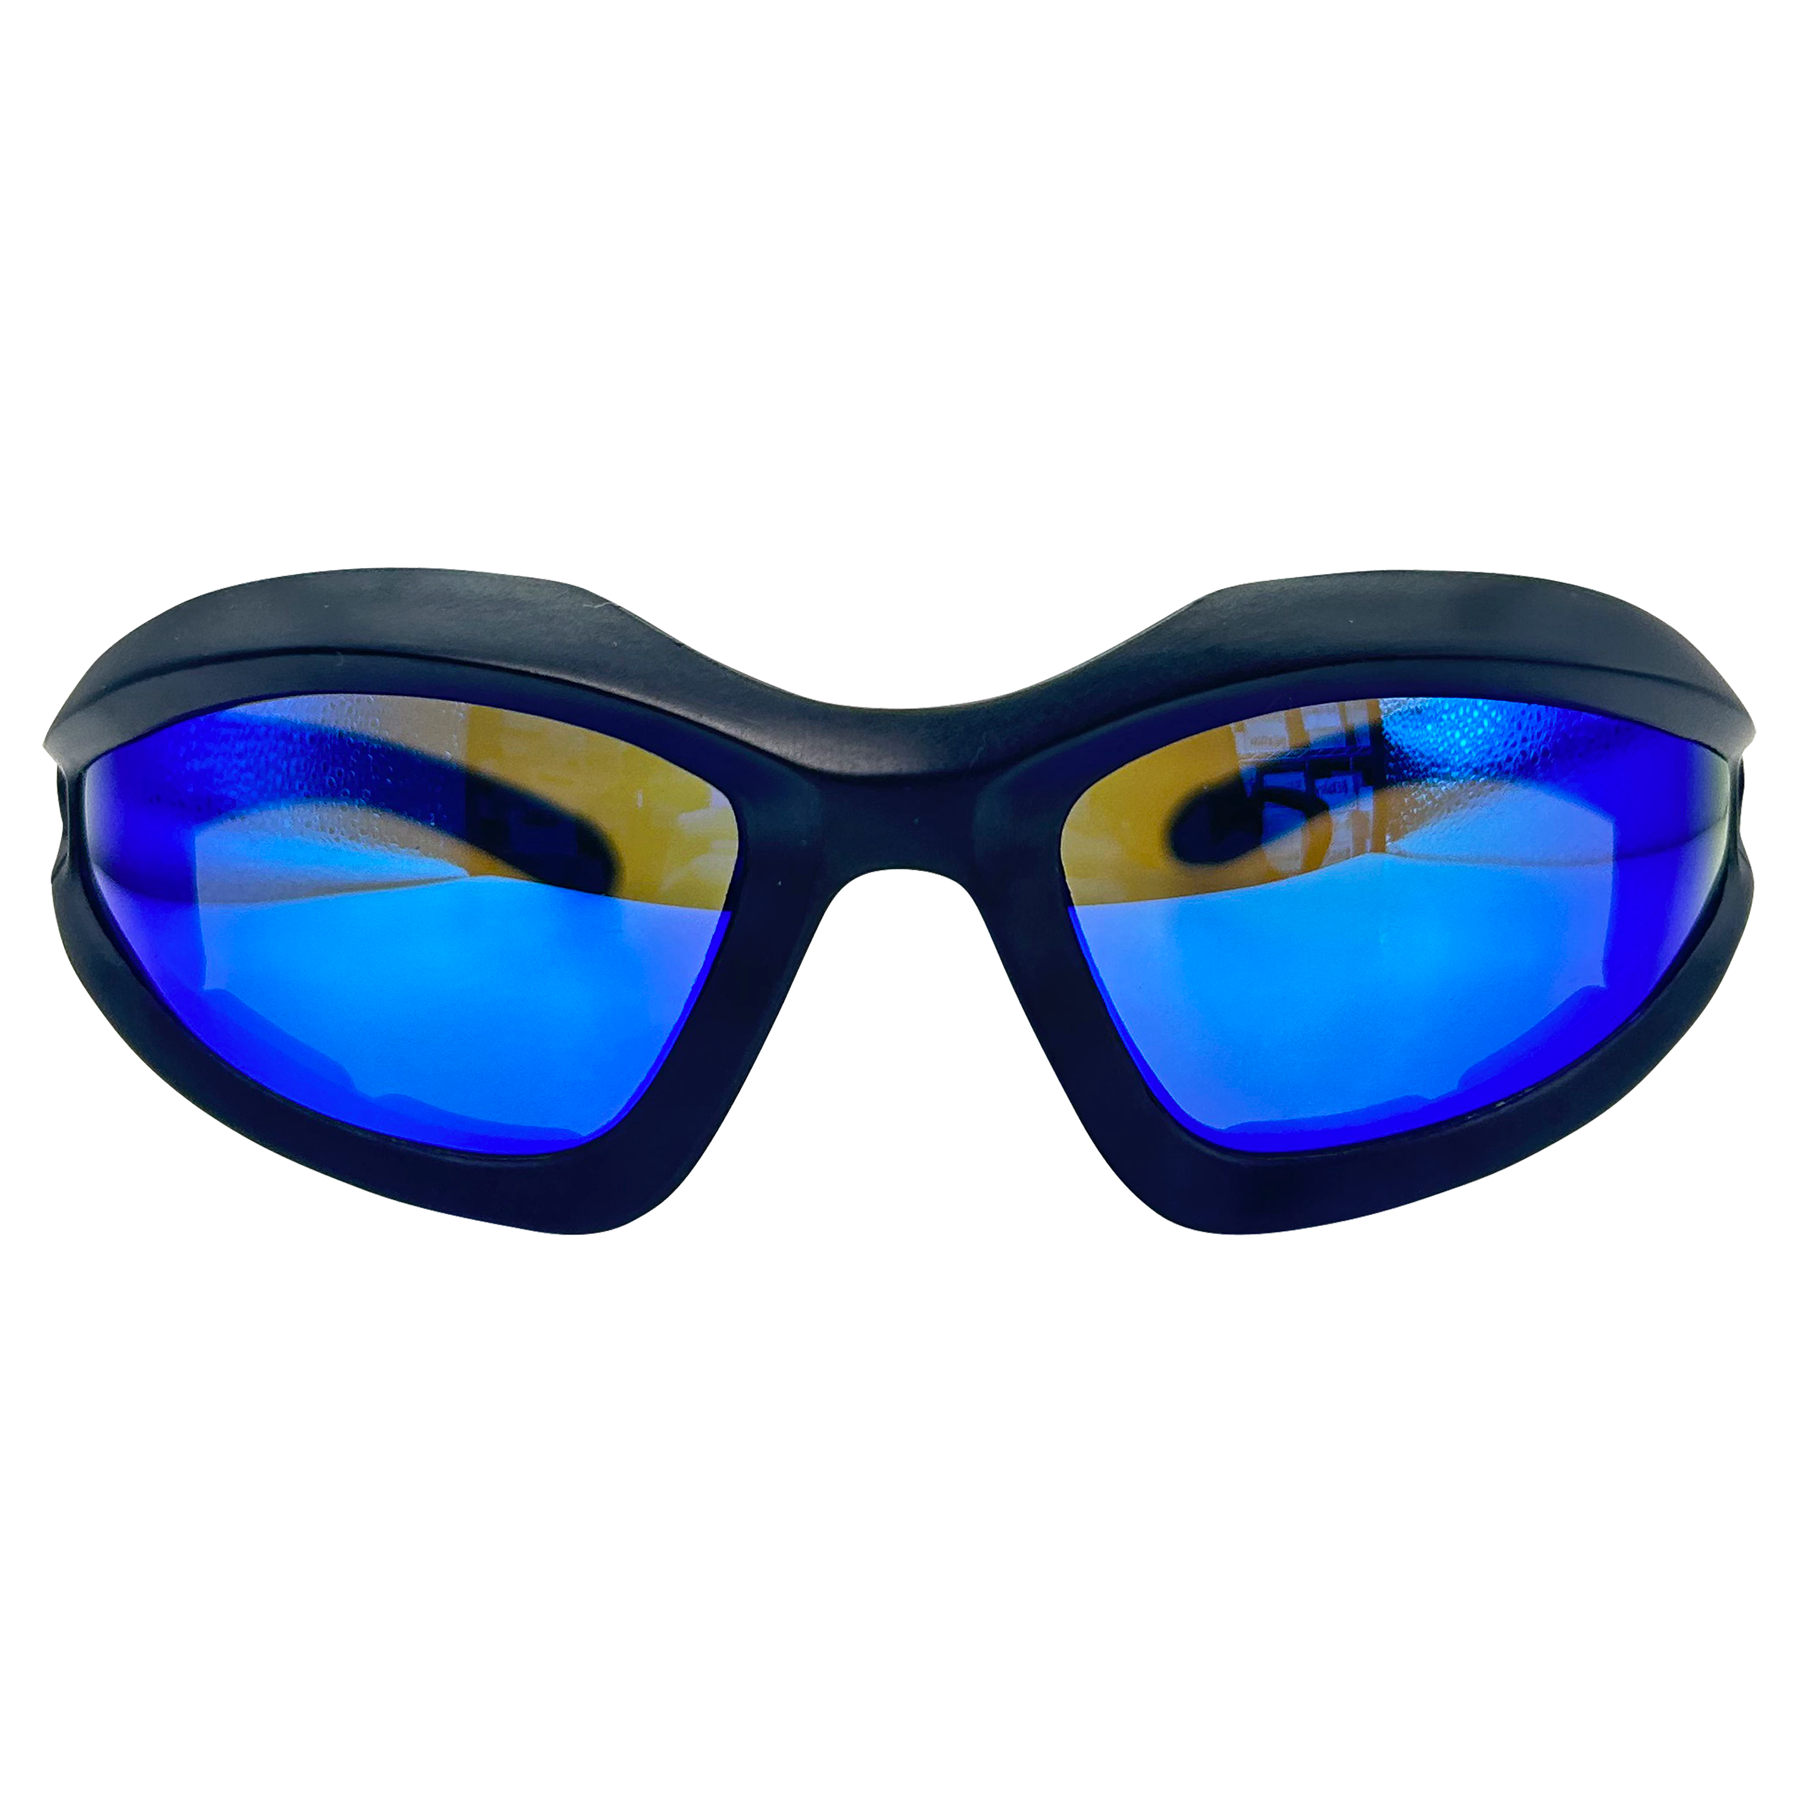 rave sunglasses with blue RV lens, sports shield futuristic style